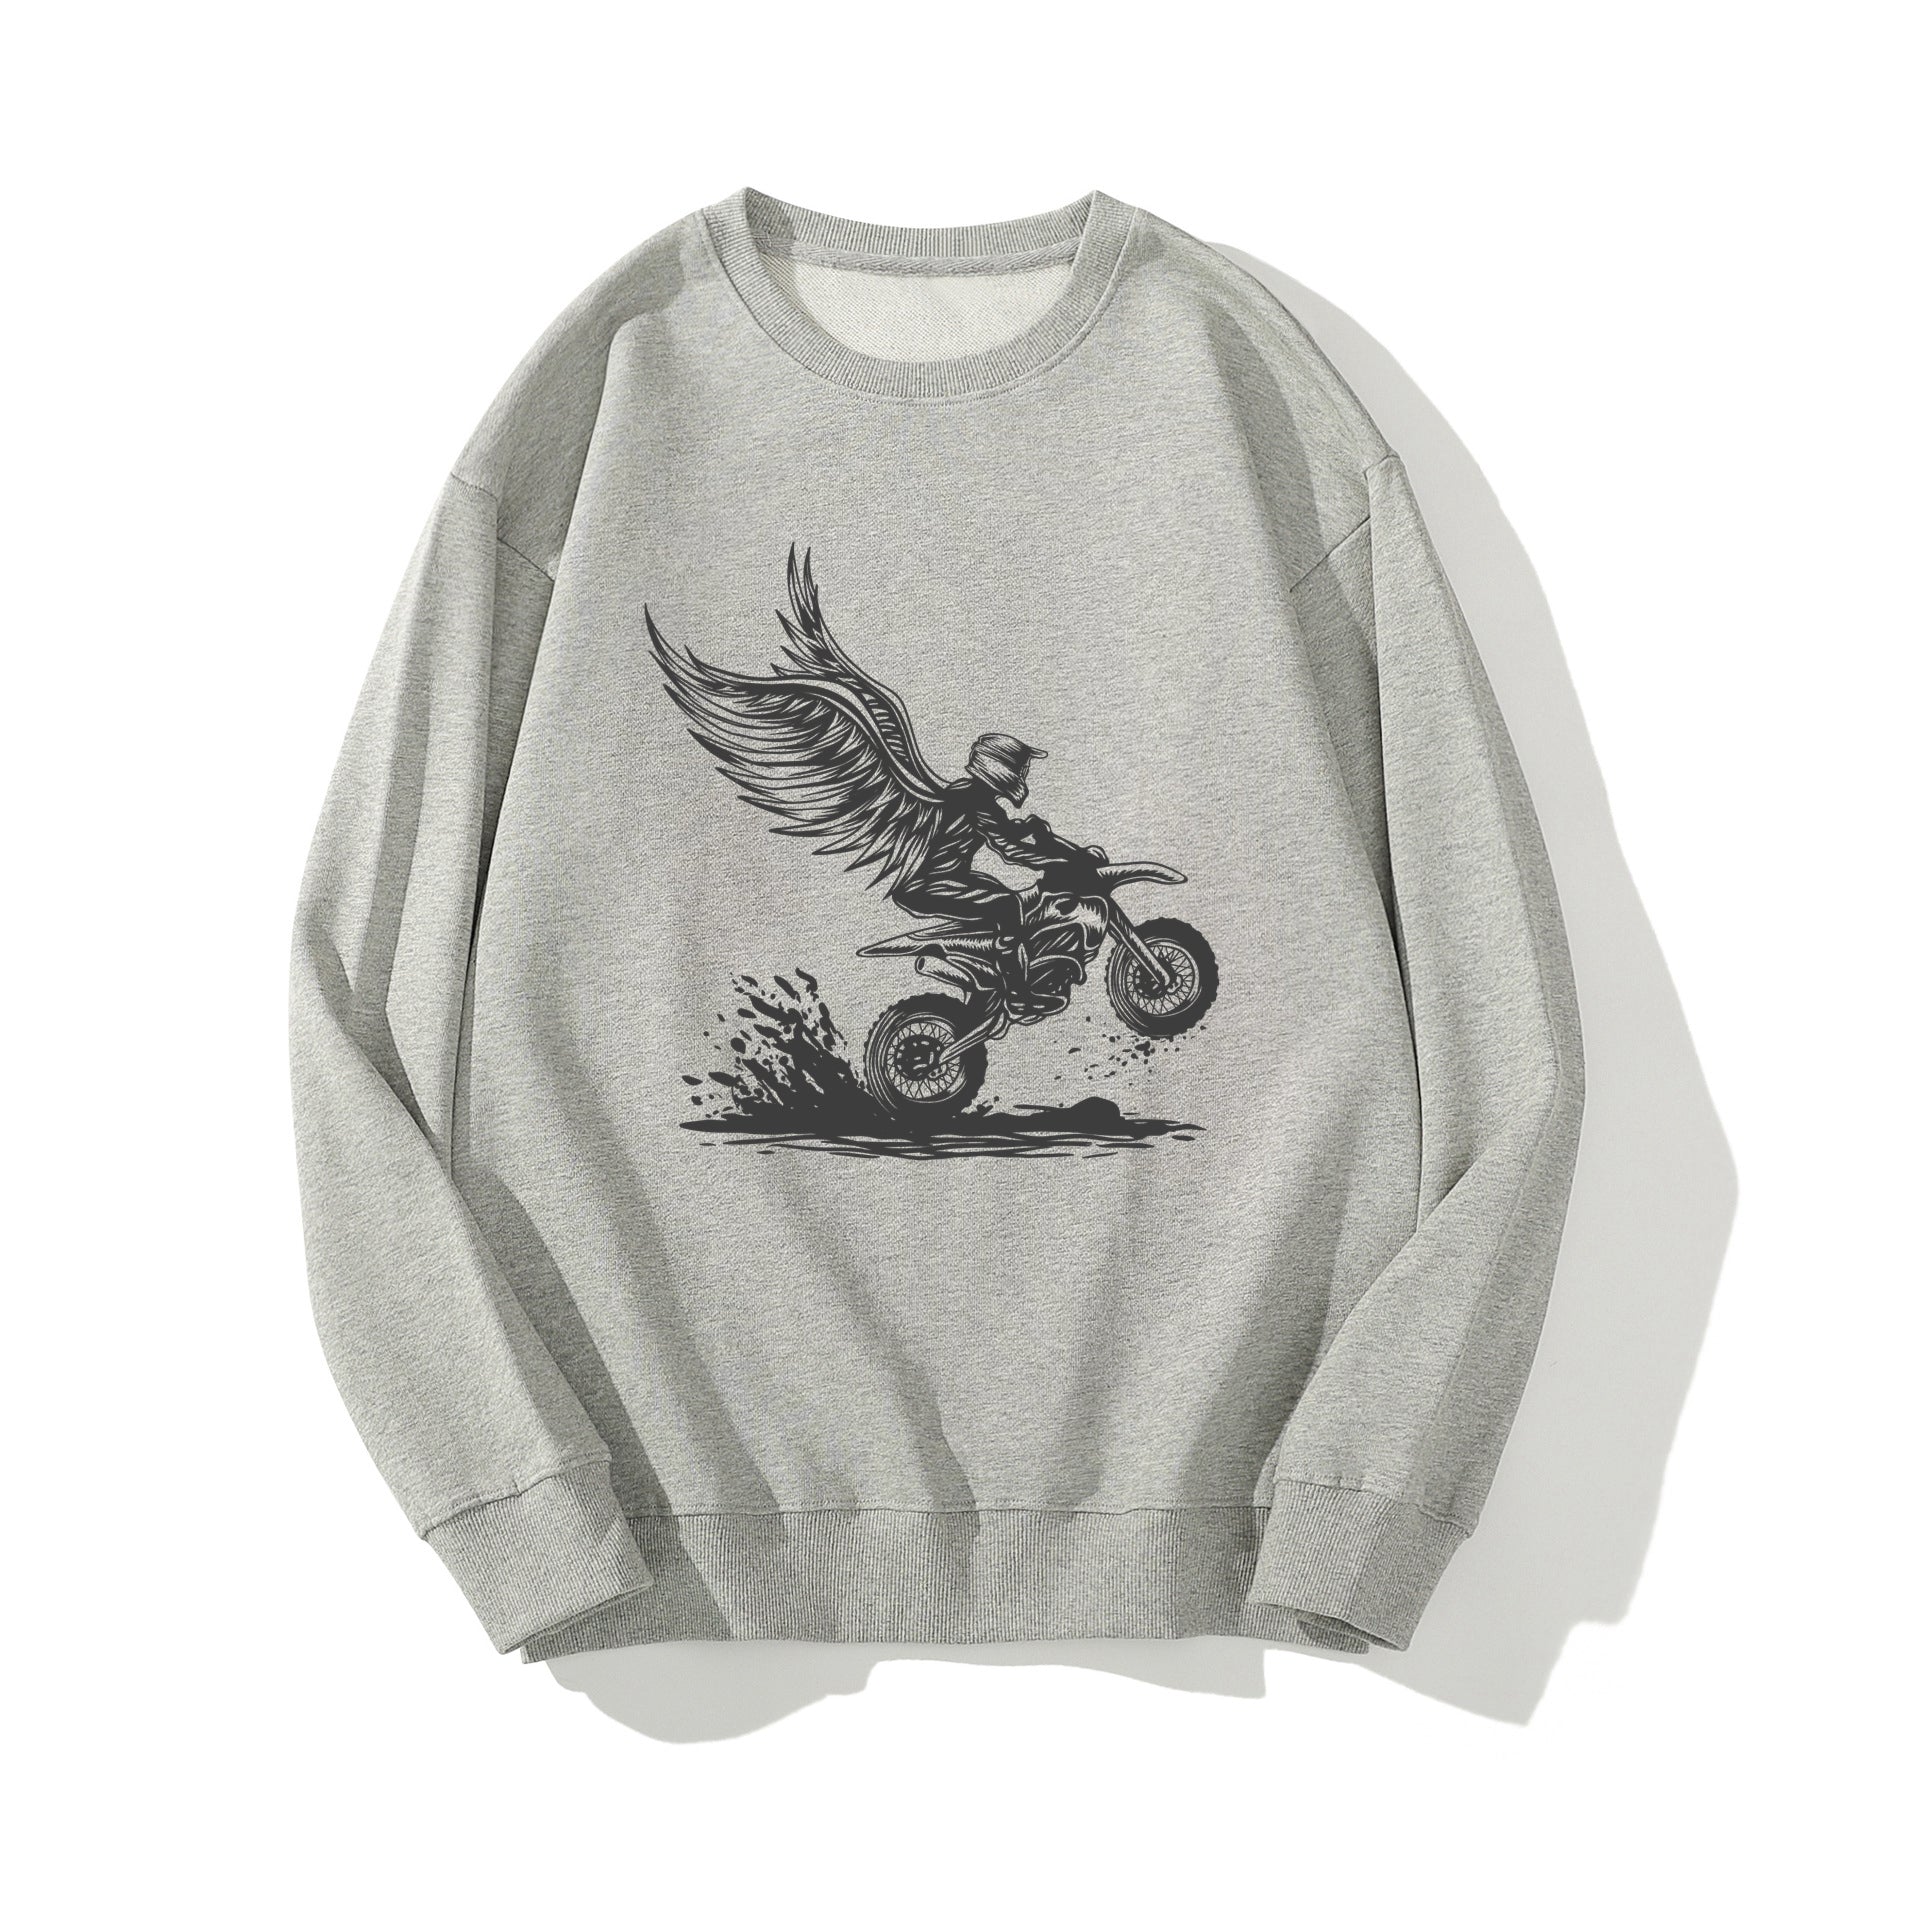 Motorcycle and Wing Crewneck Sweatshirt Men Cotton Outdoor Sweater